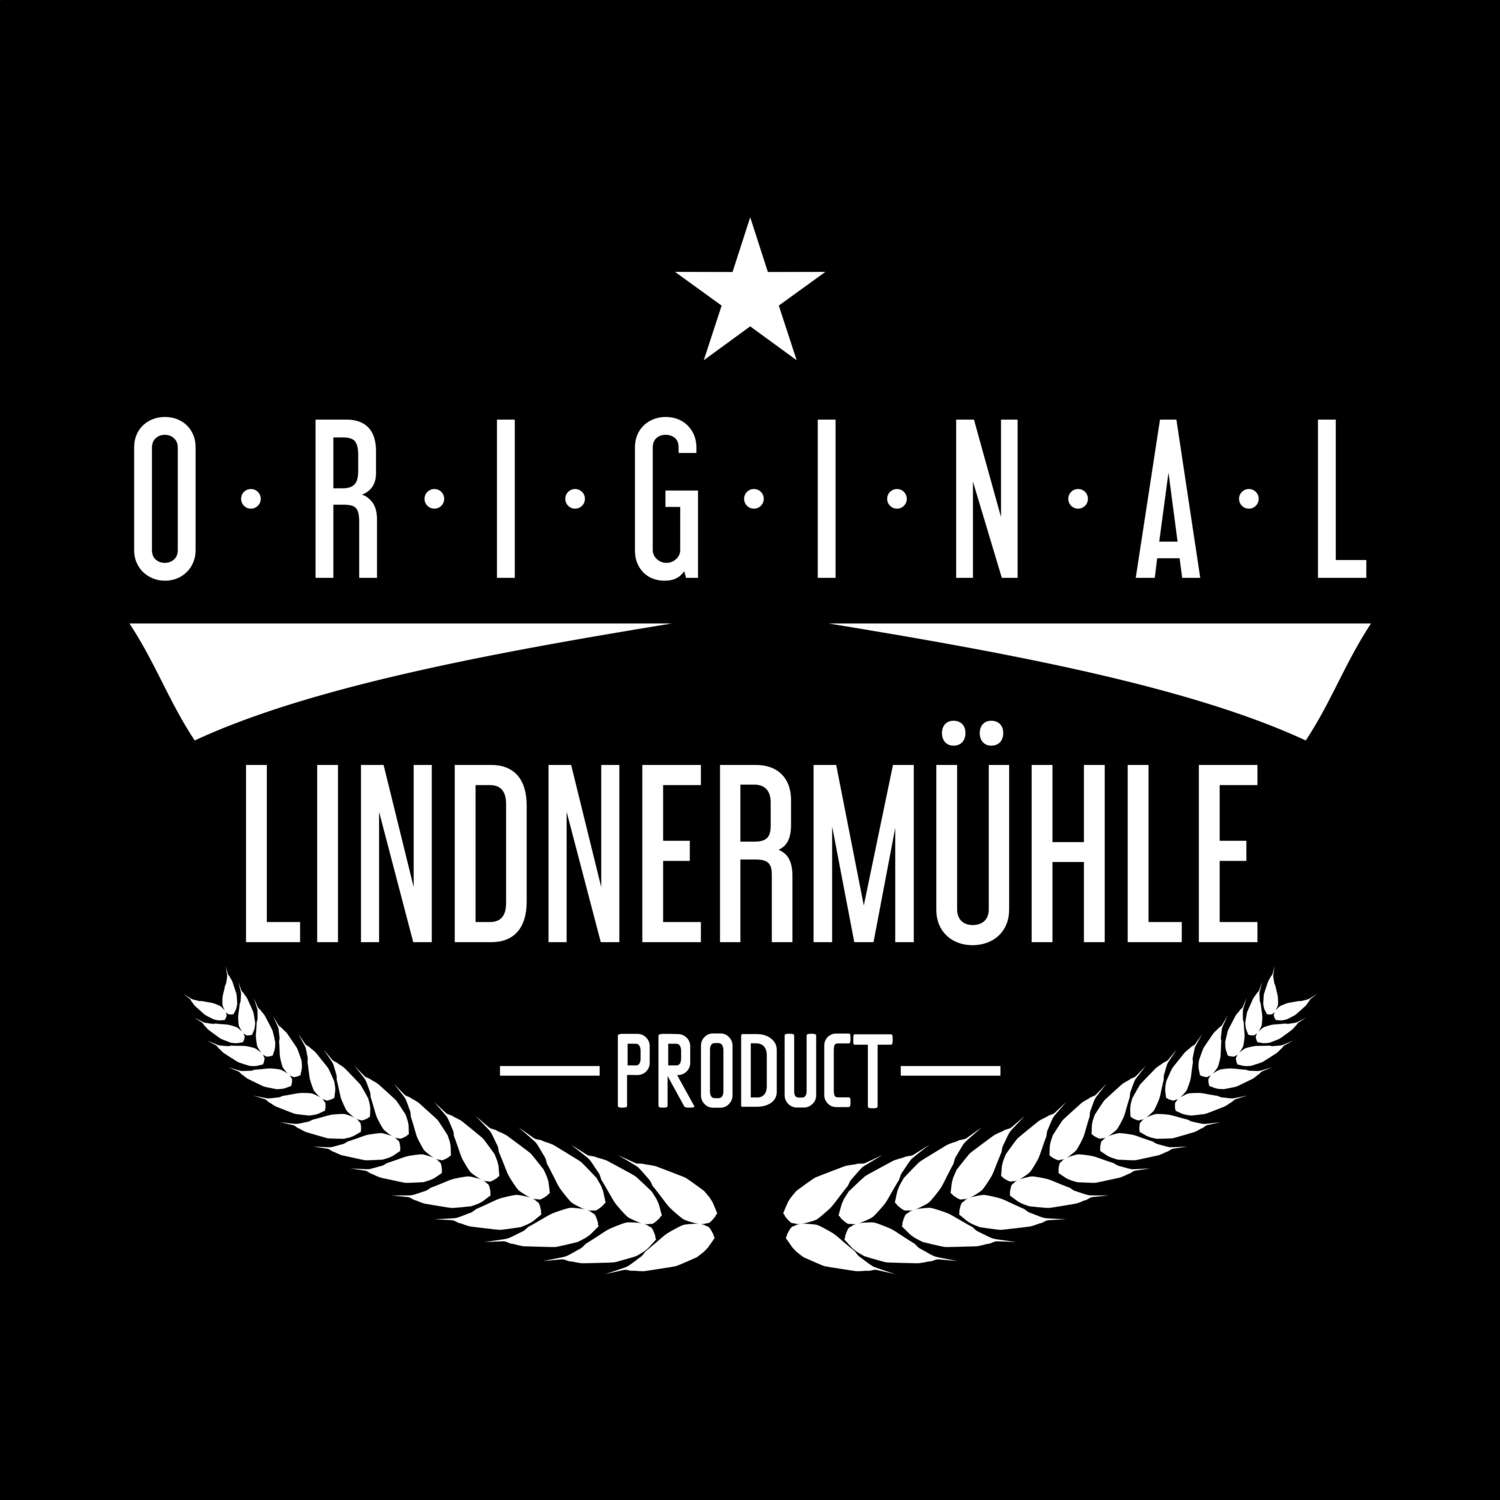 Lindnermühle T-Shirt »Original Product«